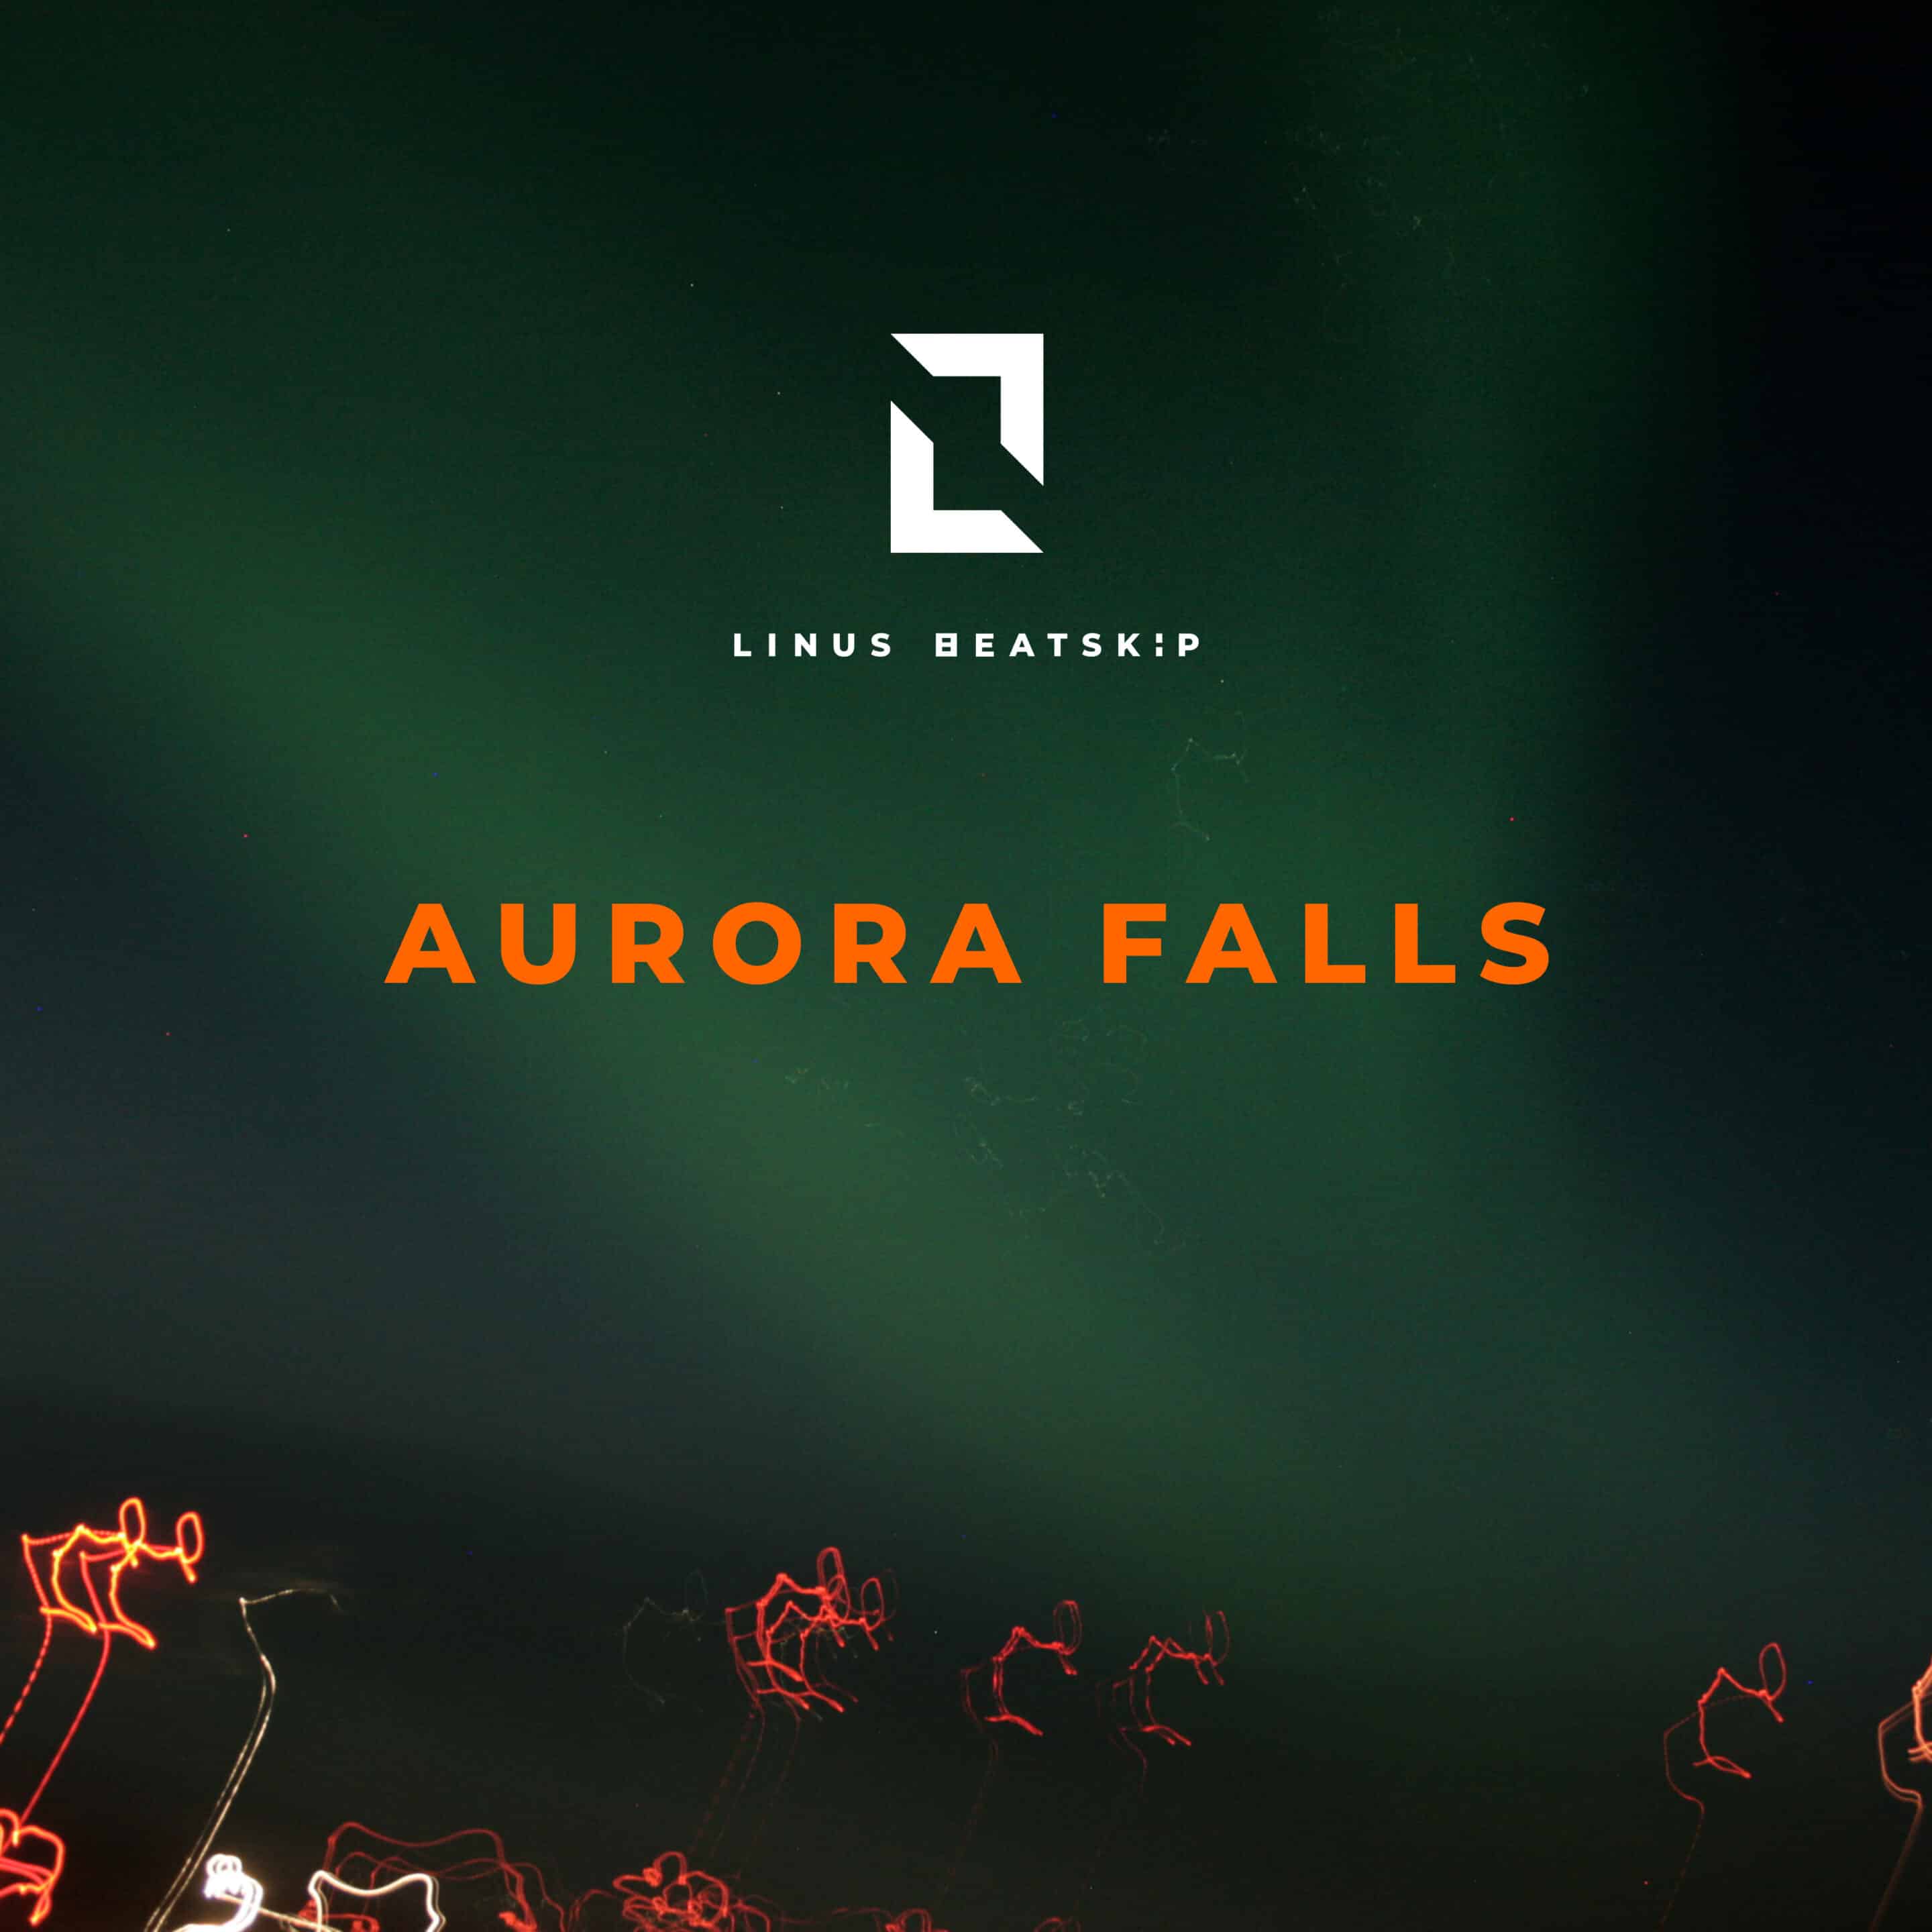 Single: Aurora Falls<br />
Artist: LINUS BEATSKiP